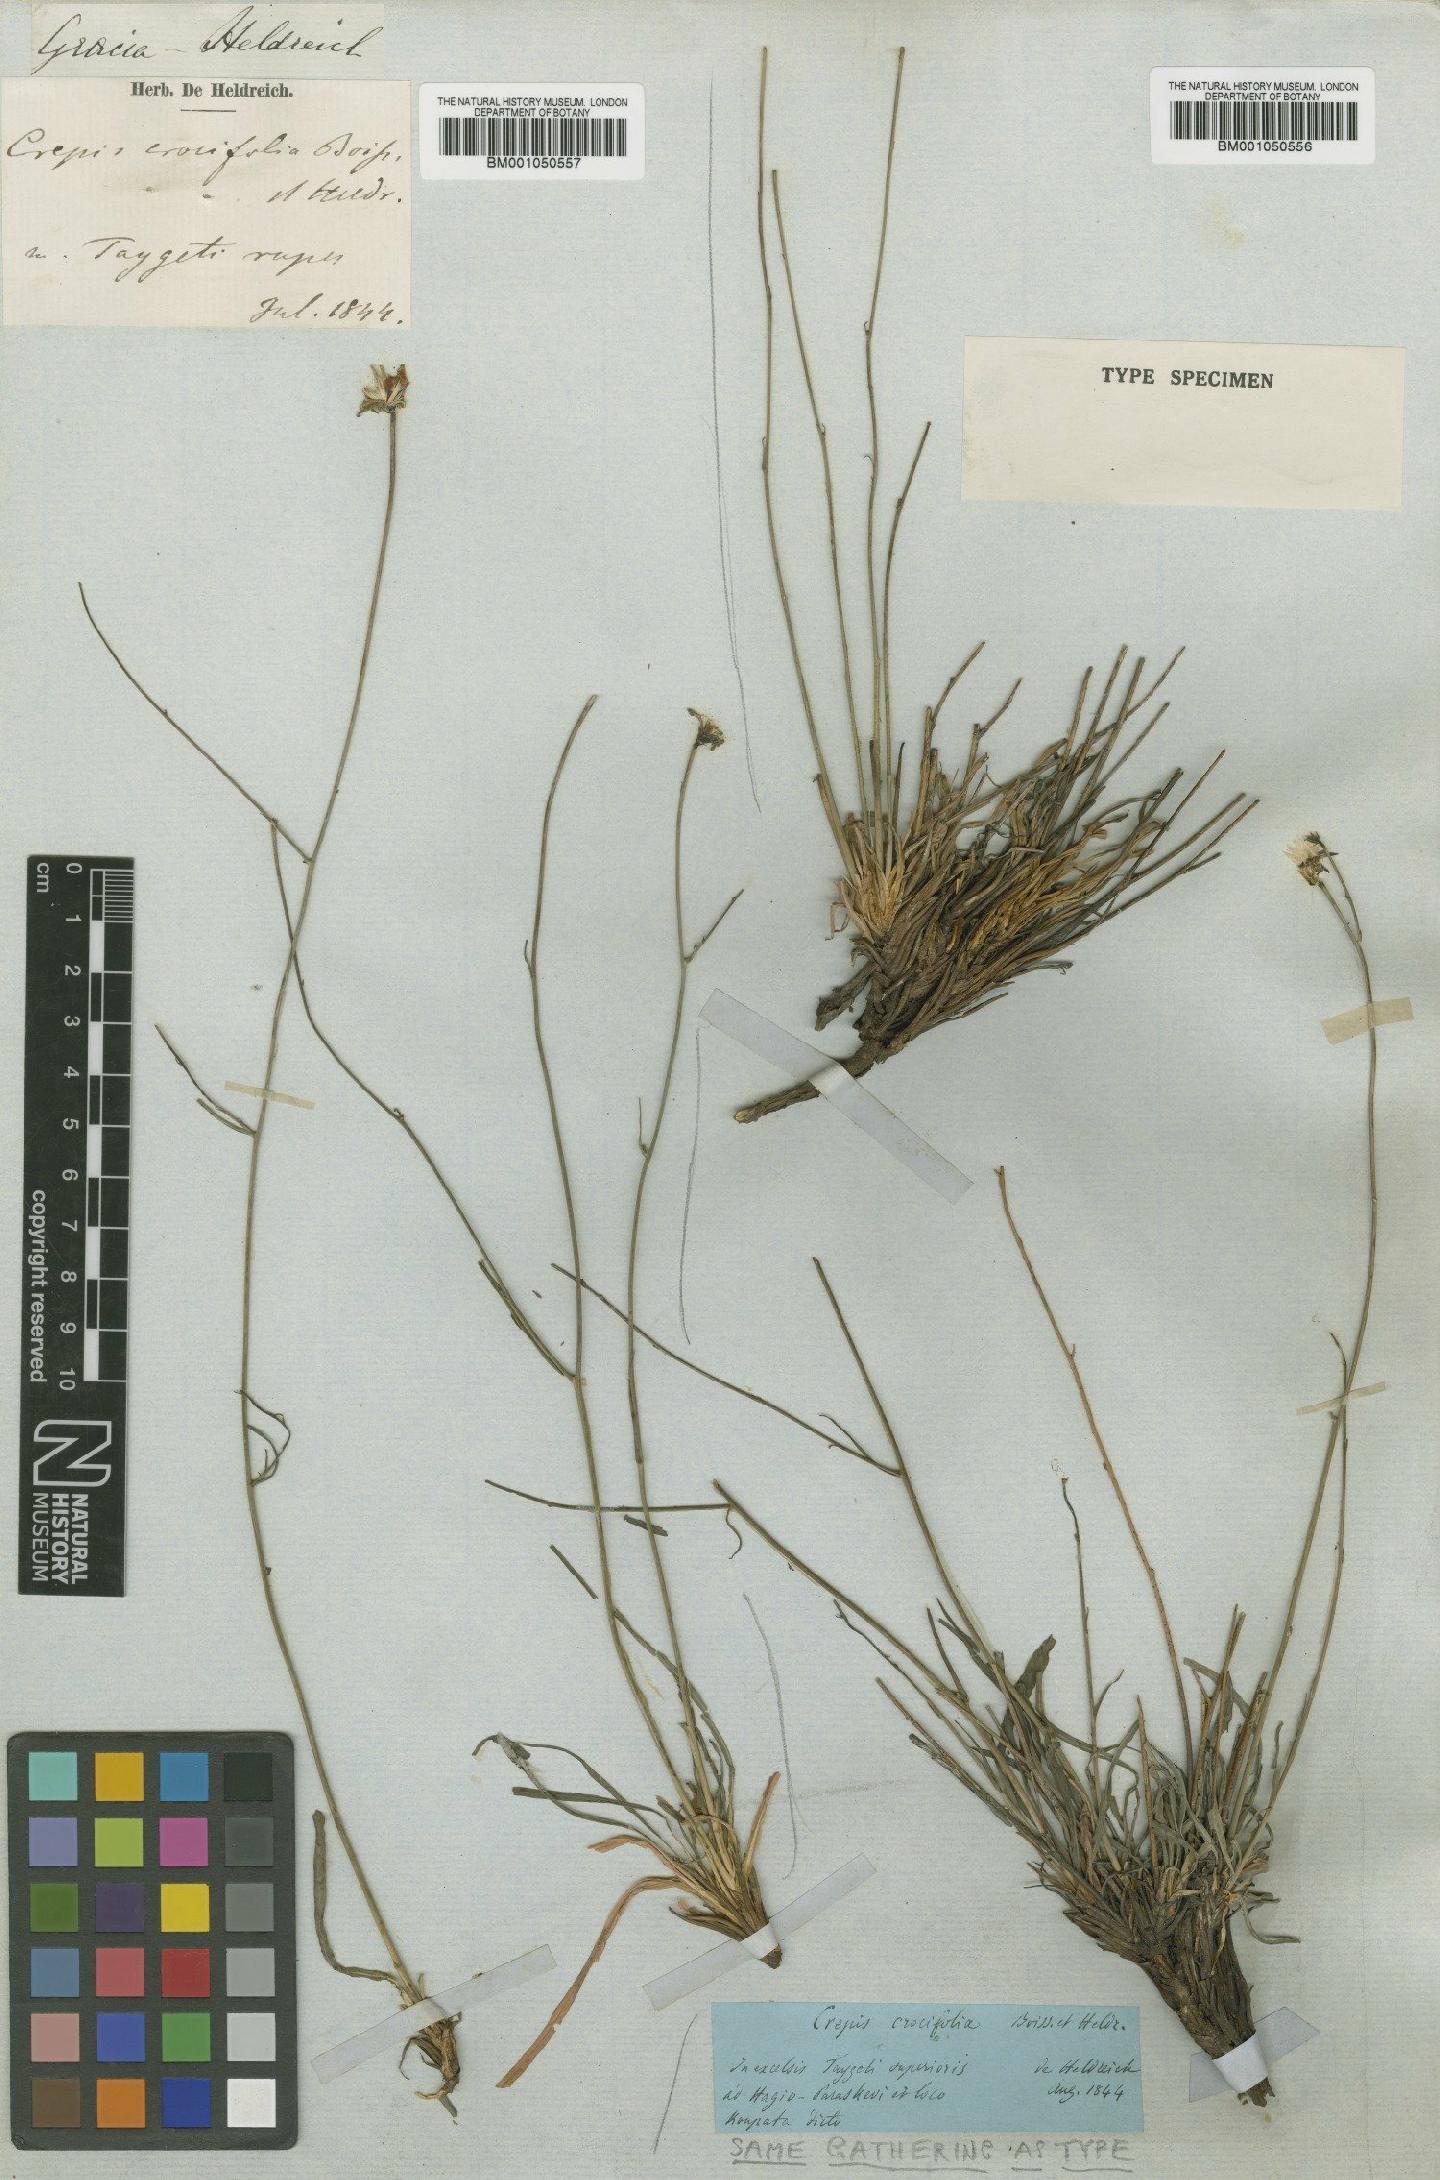 To NHMUK collection (Crepis crocifolia Boiss. & Heldr.; Type; NHMUK:ecatalogue:2395682)